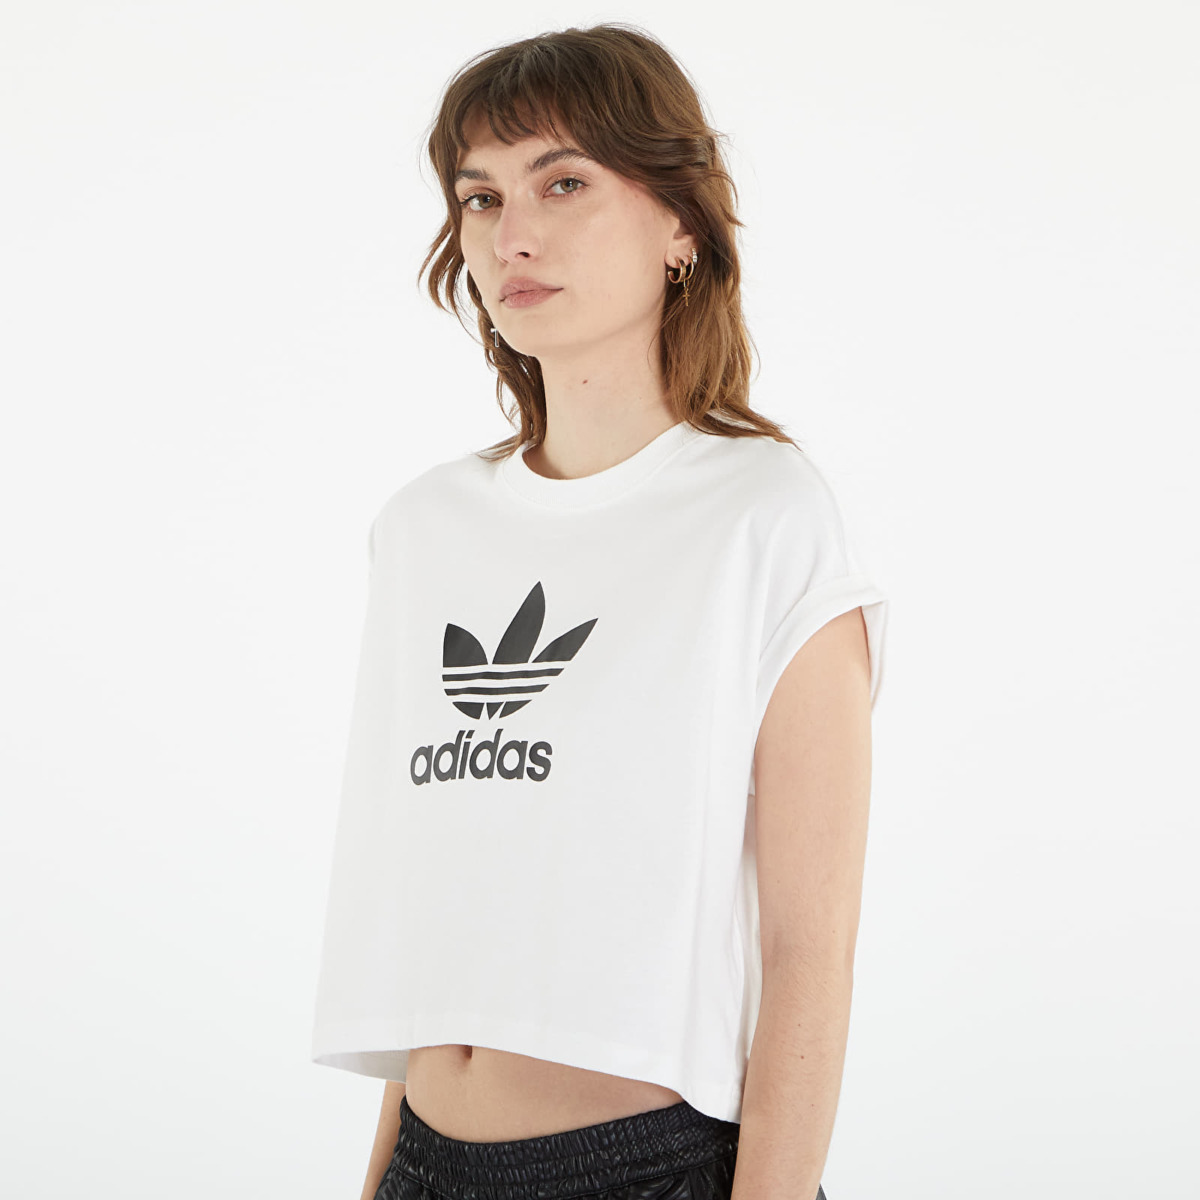 Adidas Women's White Top by Footshop GOOFASH